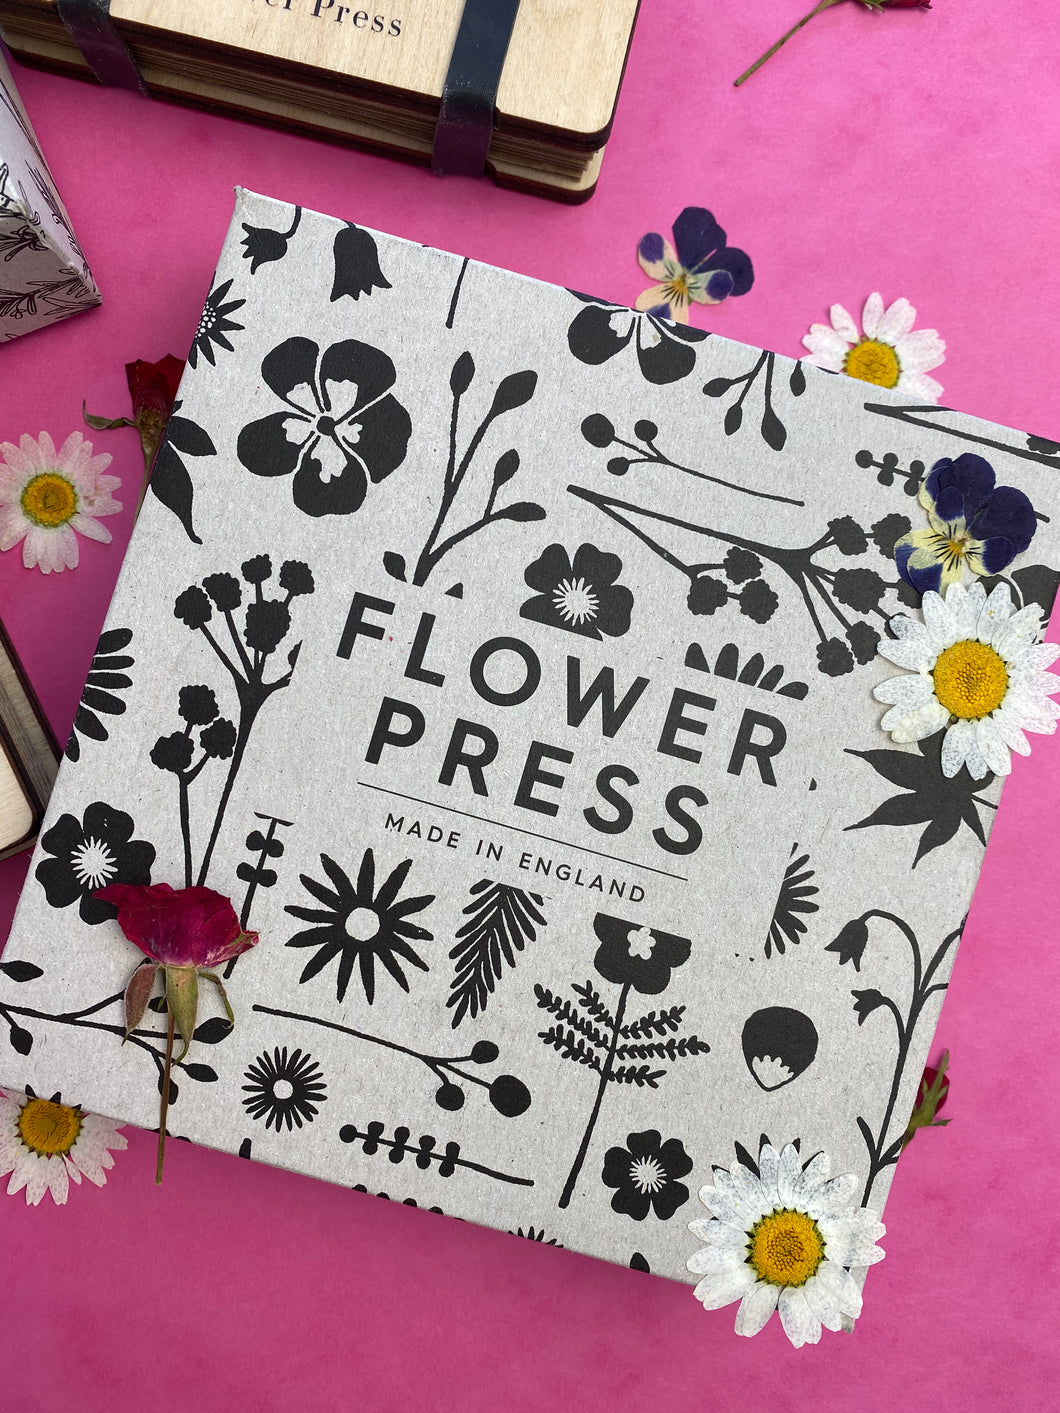 Large flower press, simple design